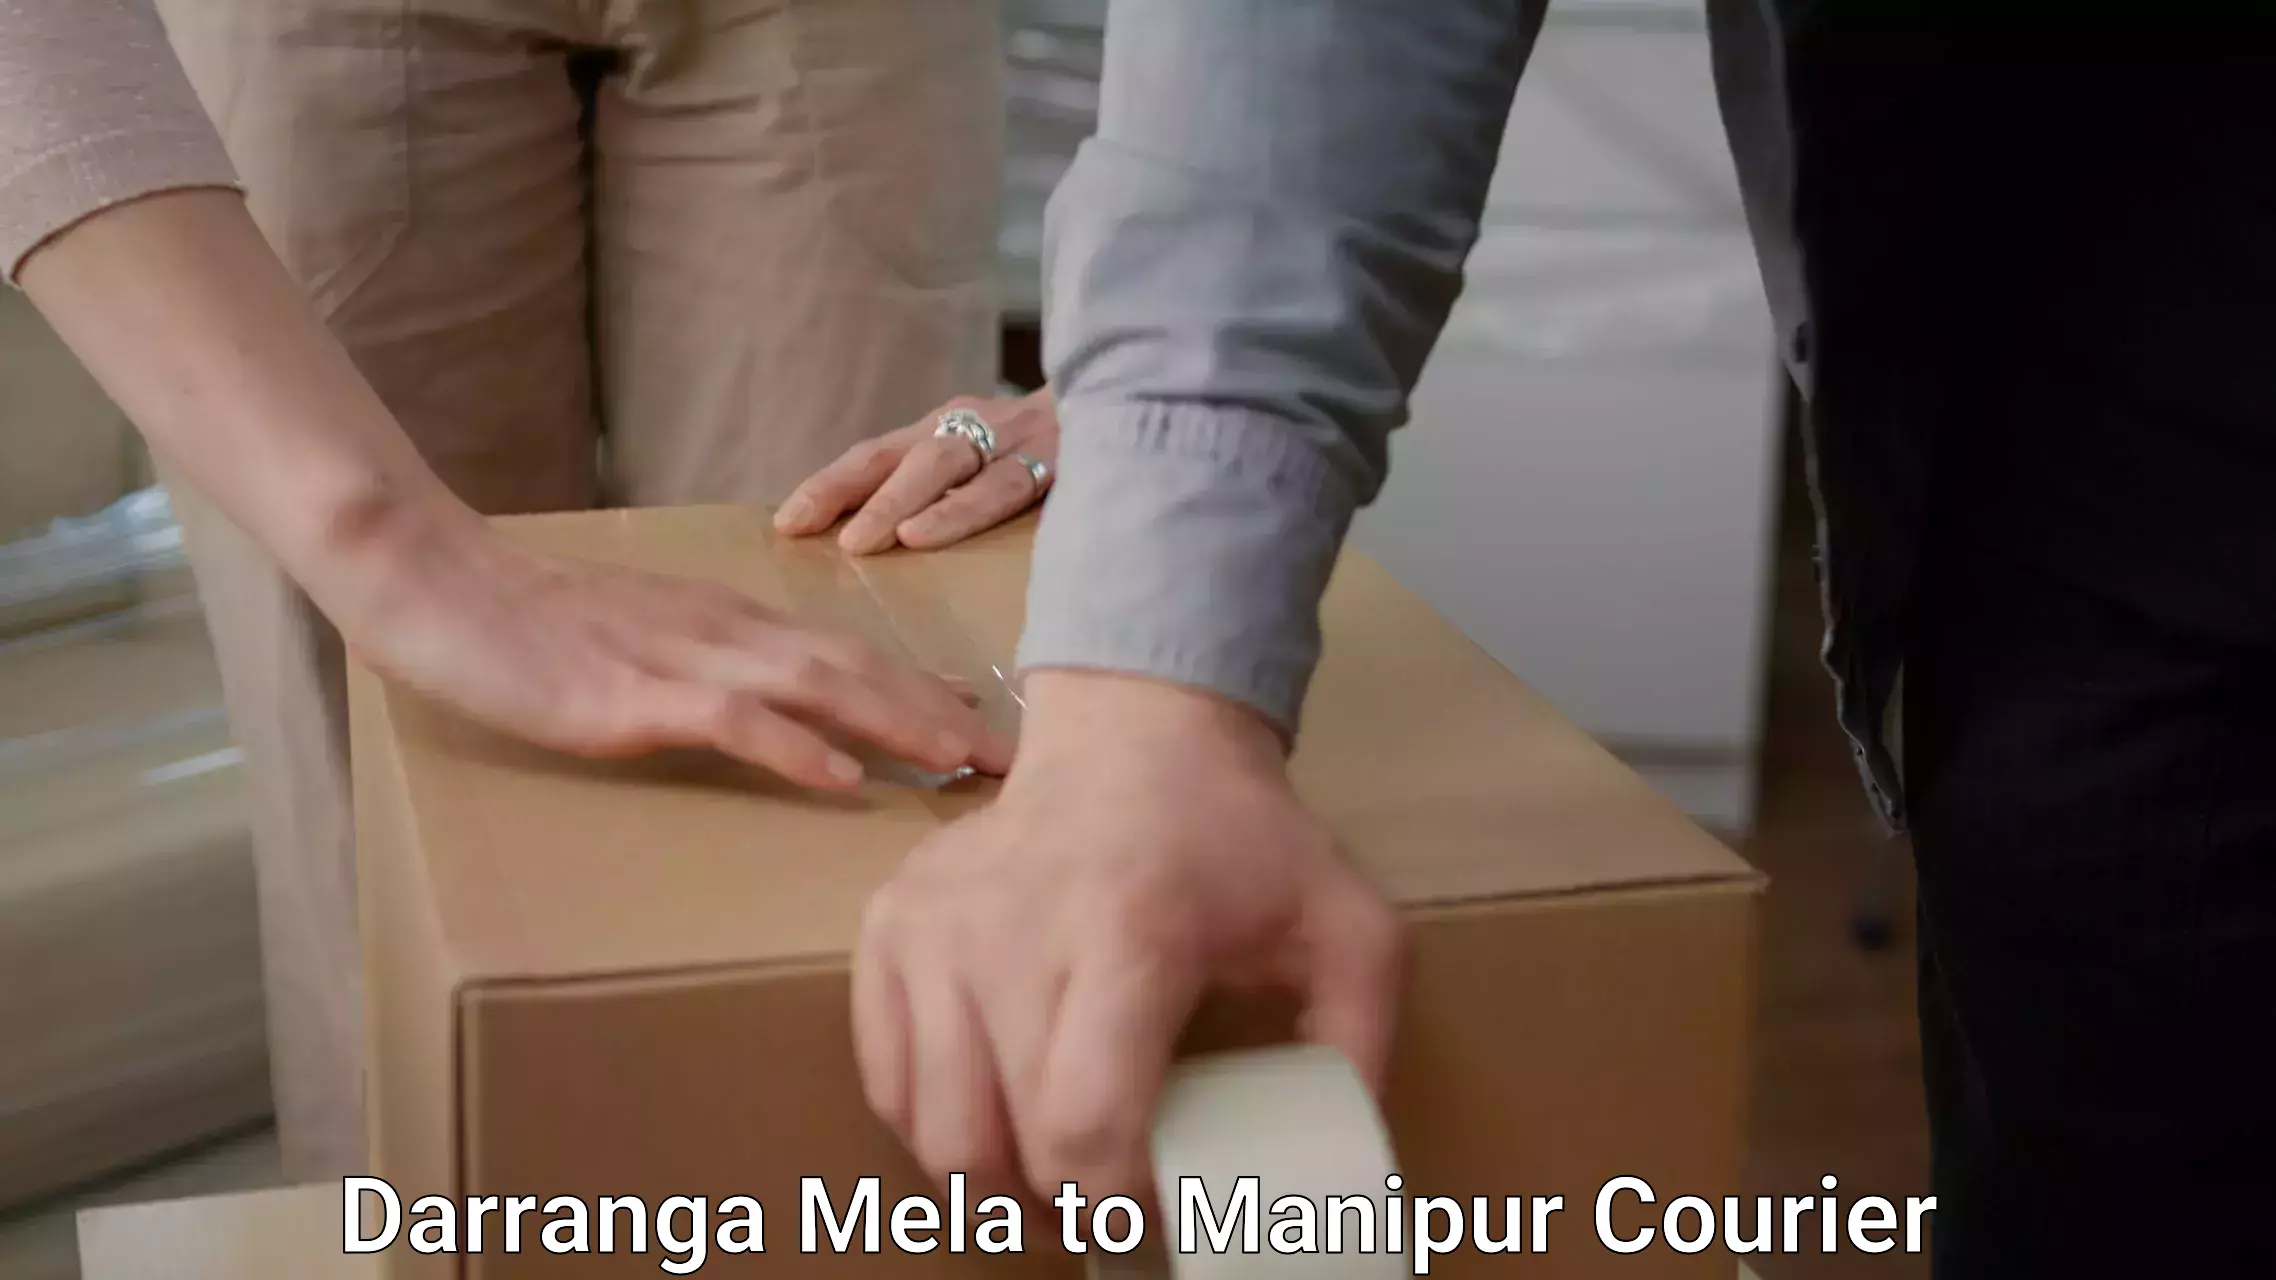 Dependable moving services Darranga Mela to Manipur